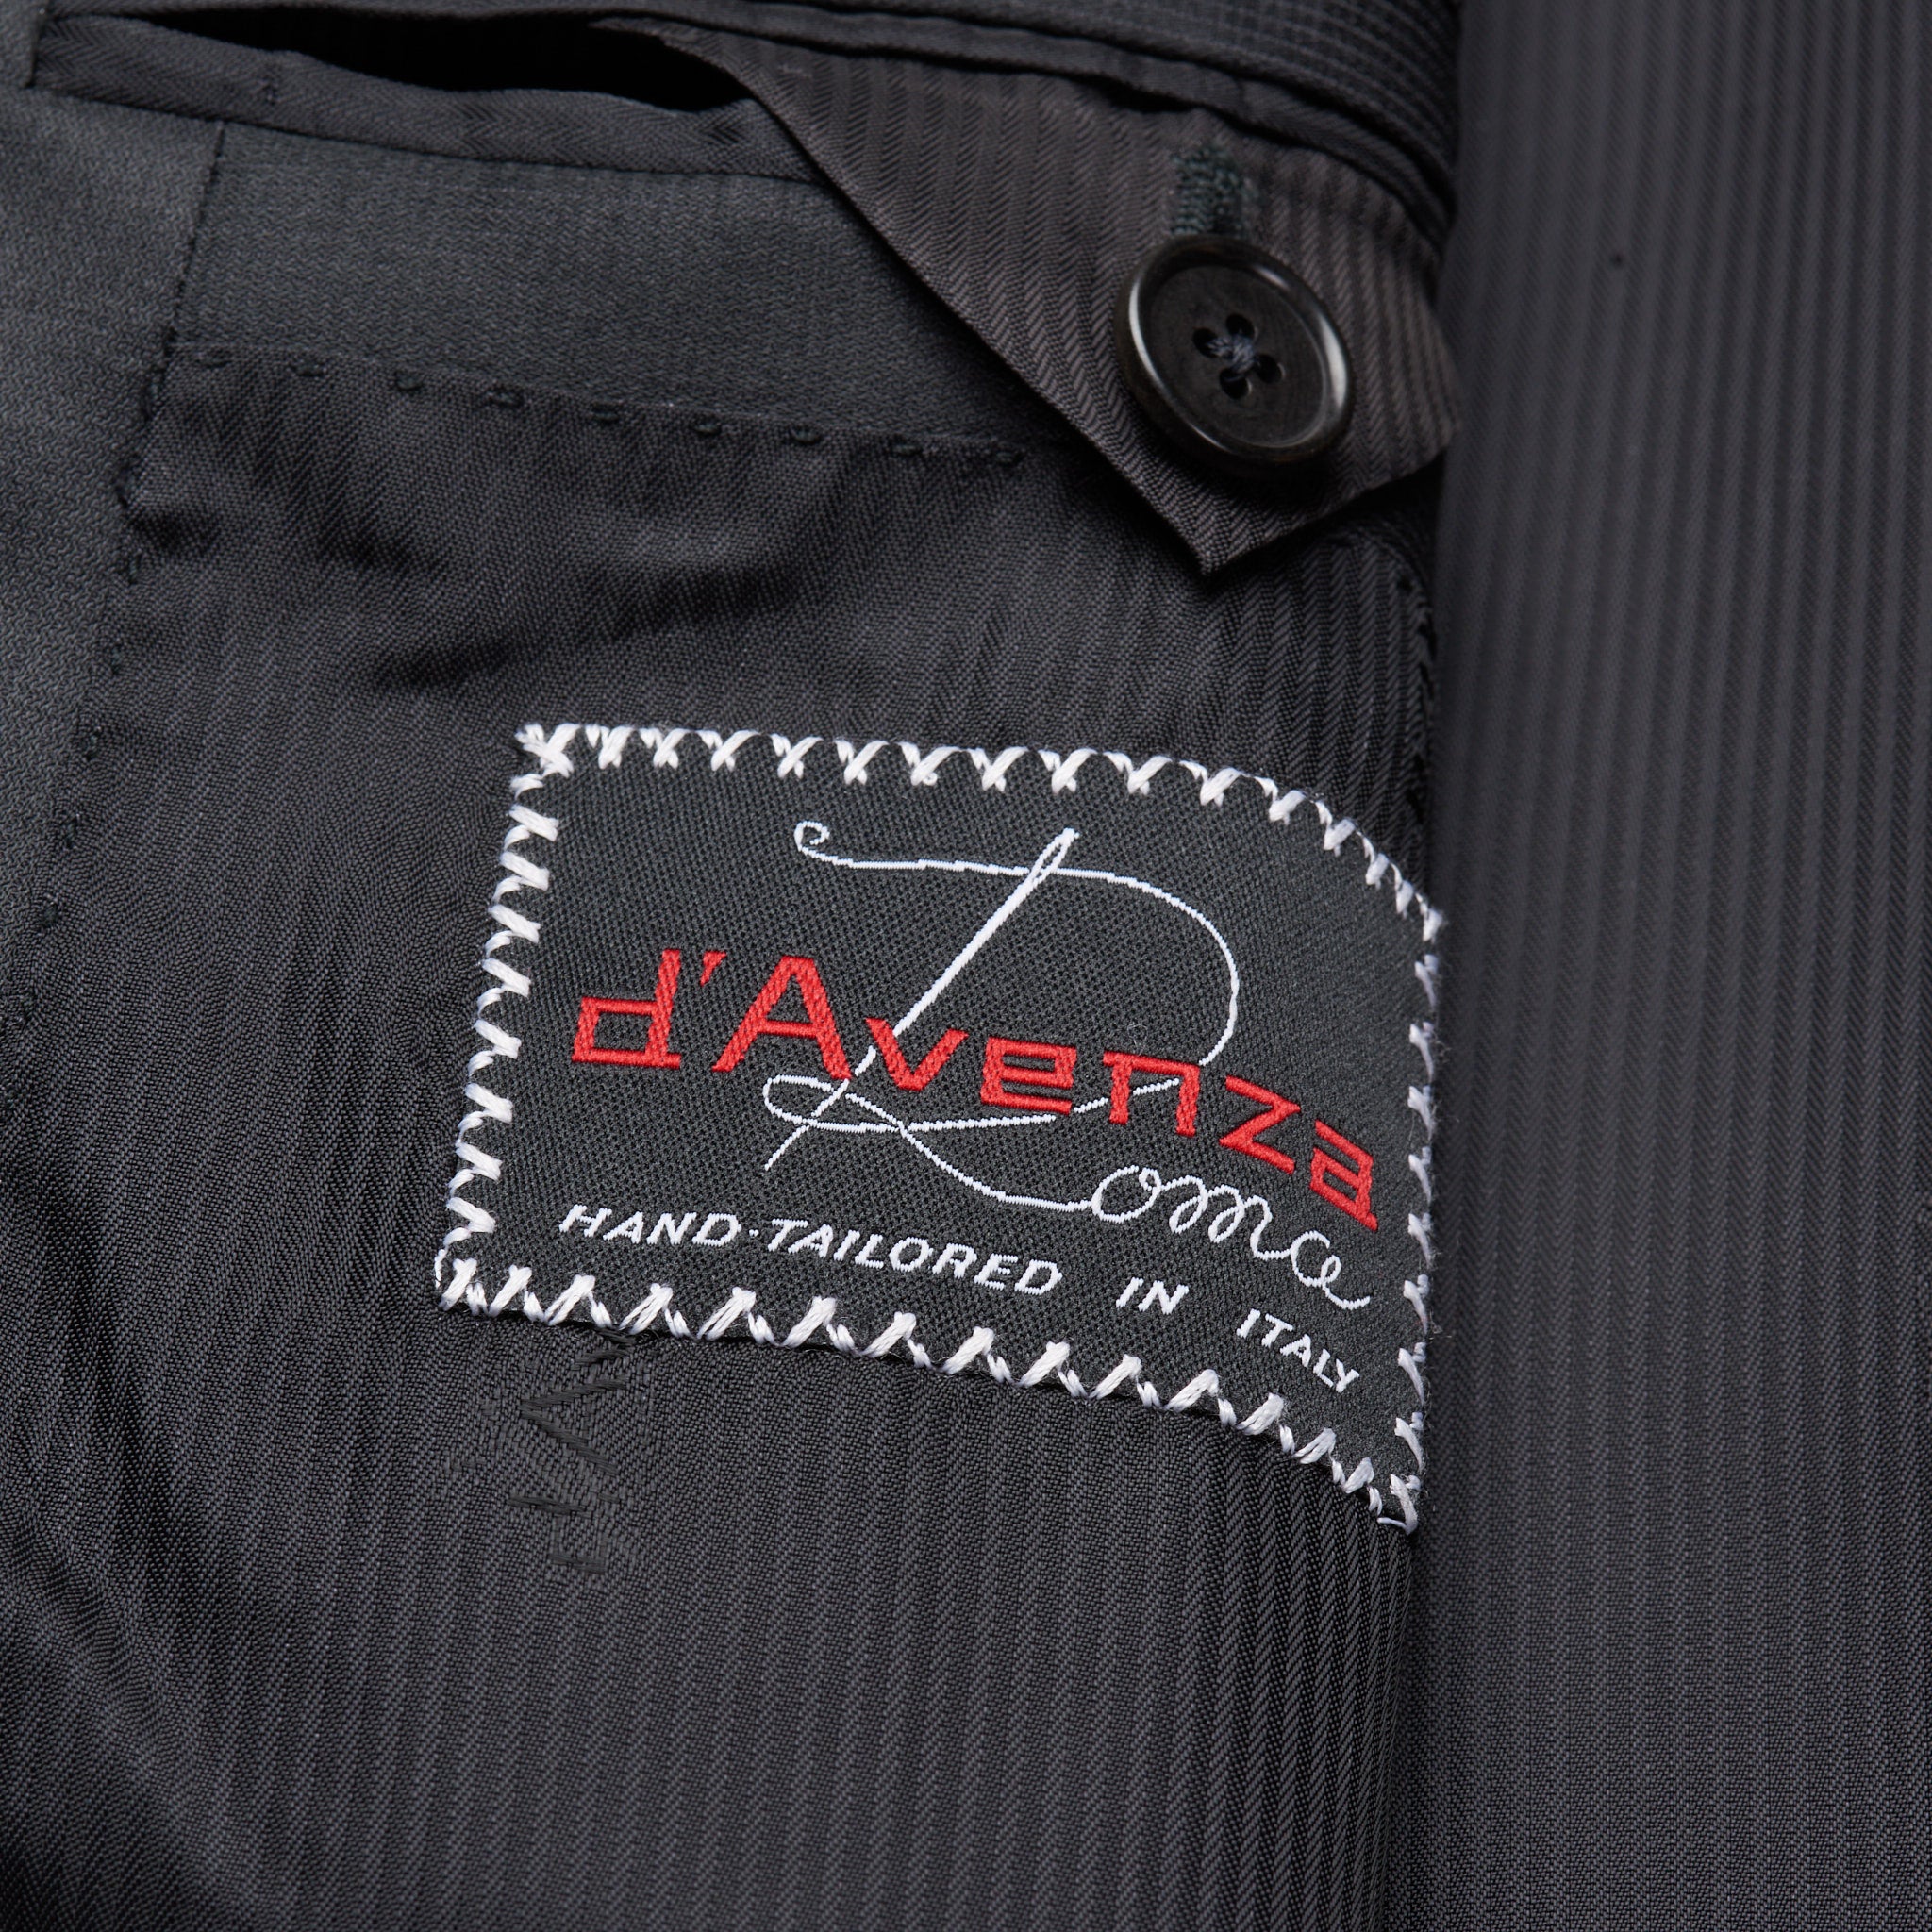 D'AVENZA "KENT" Handmade Black Striped 1 Button Wool Silk Suit 50 NEW US 40 Long D'AVENZA